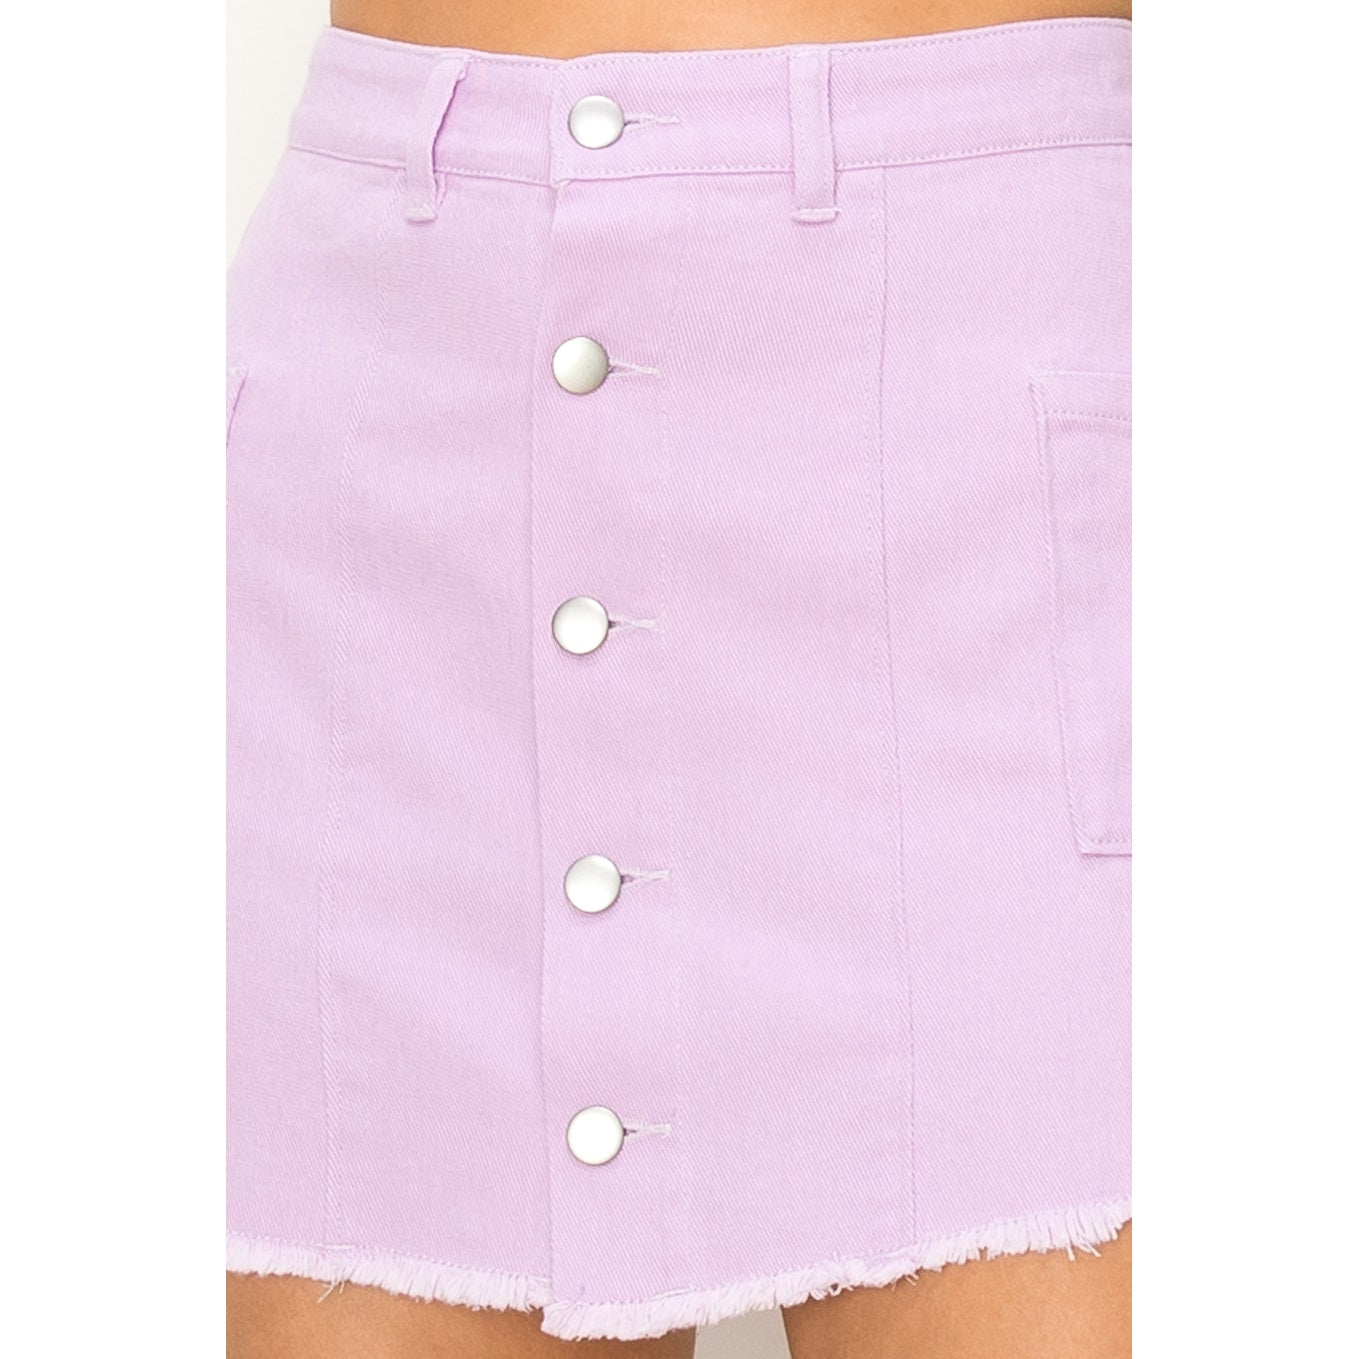 Drawn To You Lavender Mini Skirt